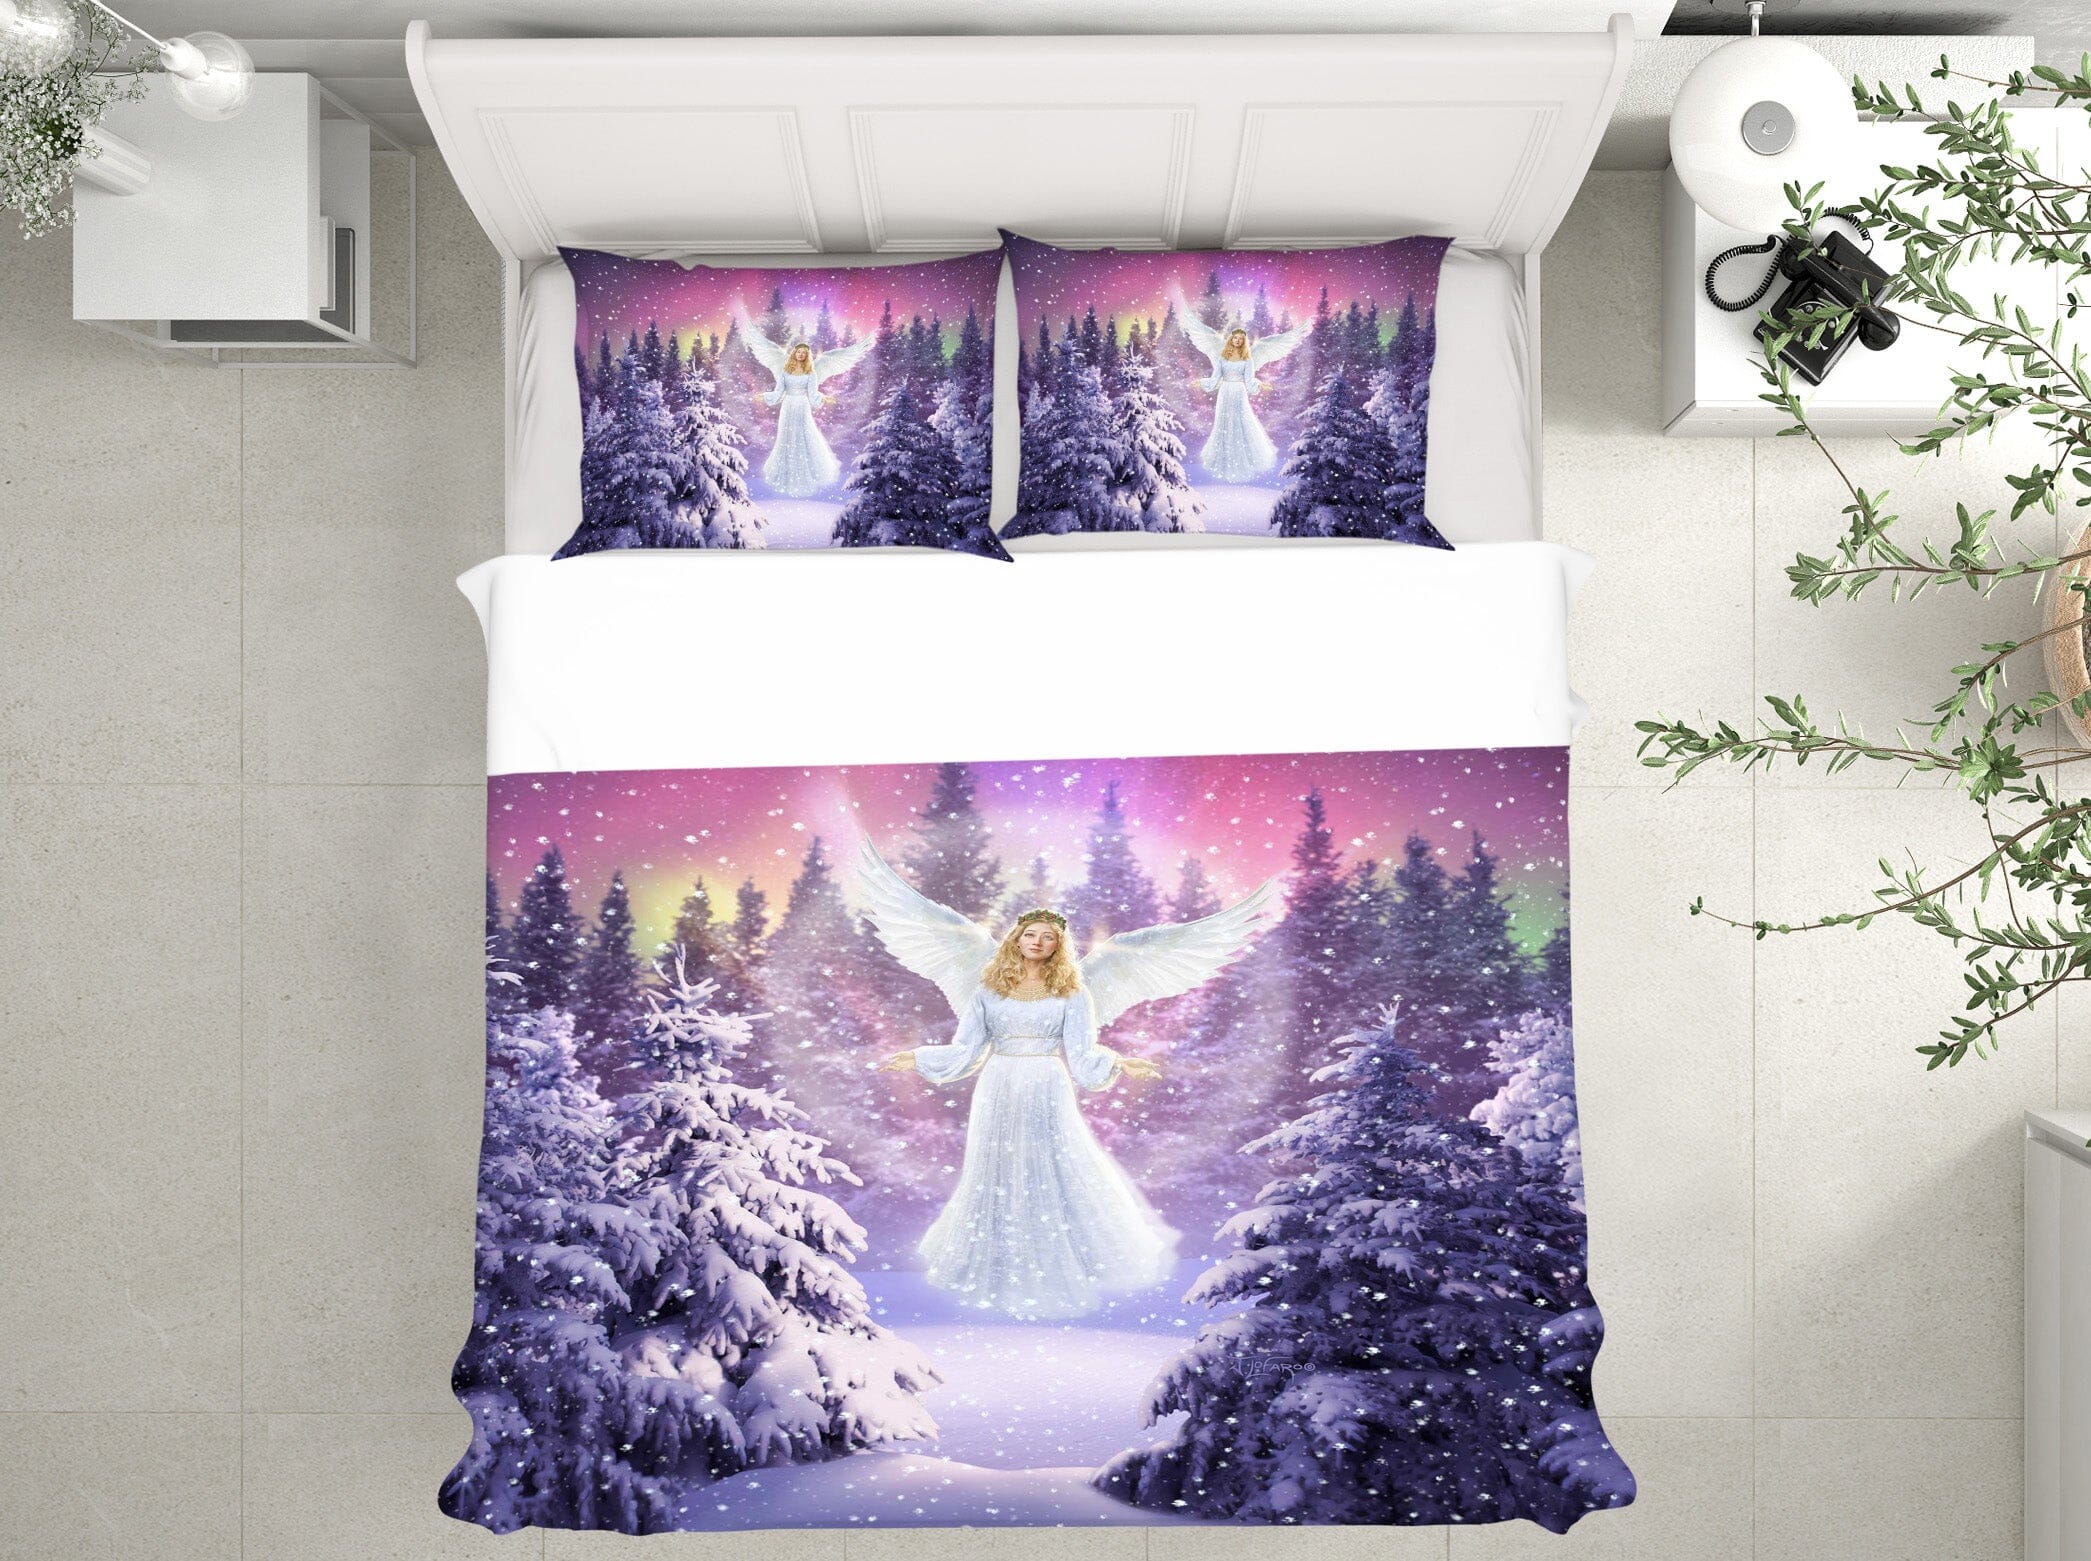 3D Snow Angel 2132 Jerry LoFaro bedding Bed Pillowcases Quilt Quiet Covers AJ Creativity Home 